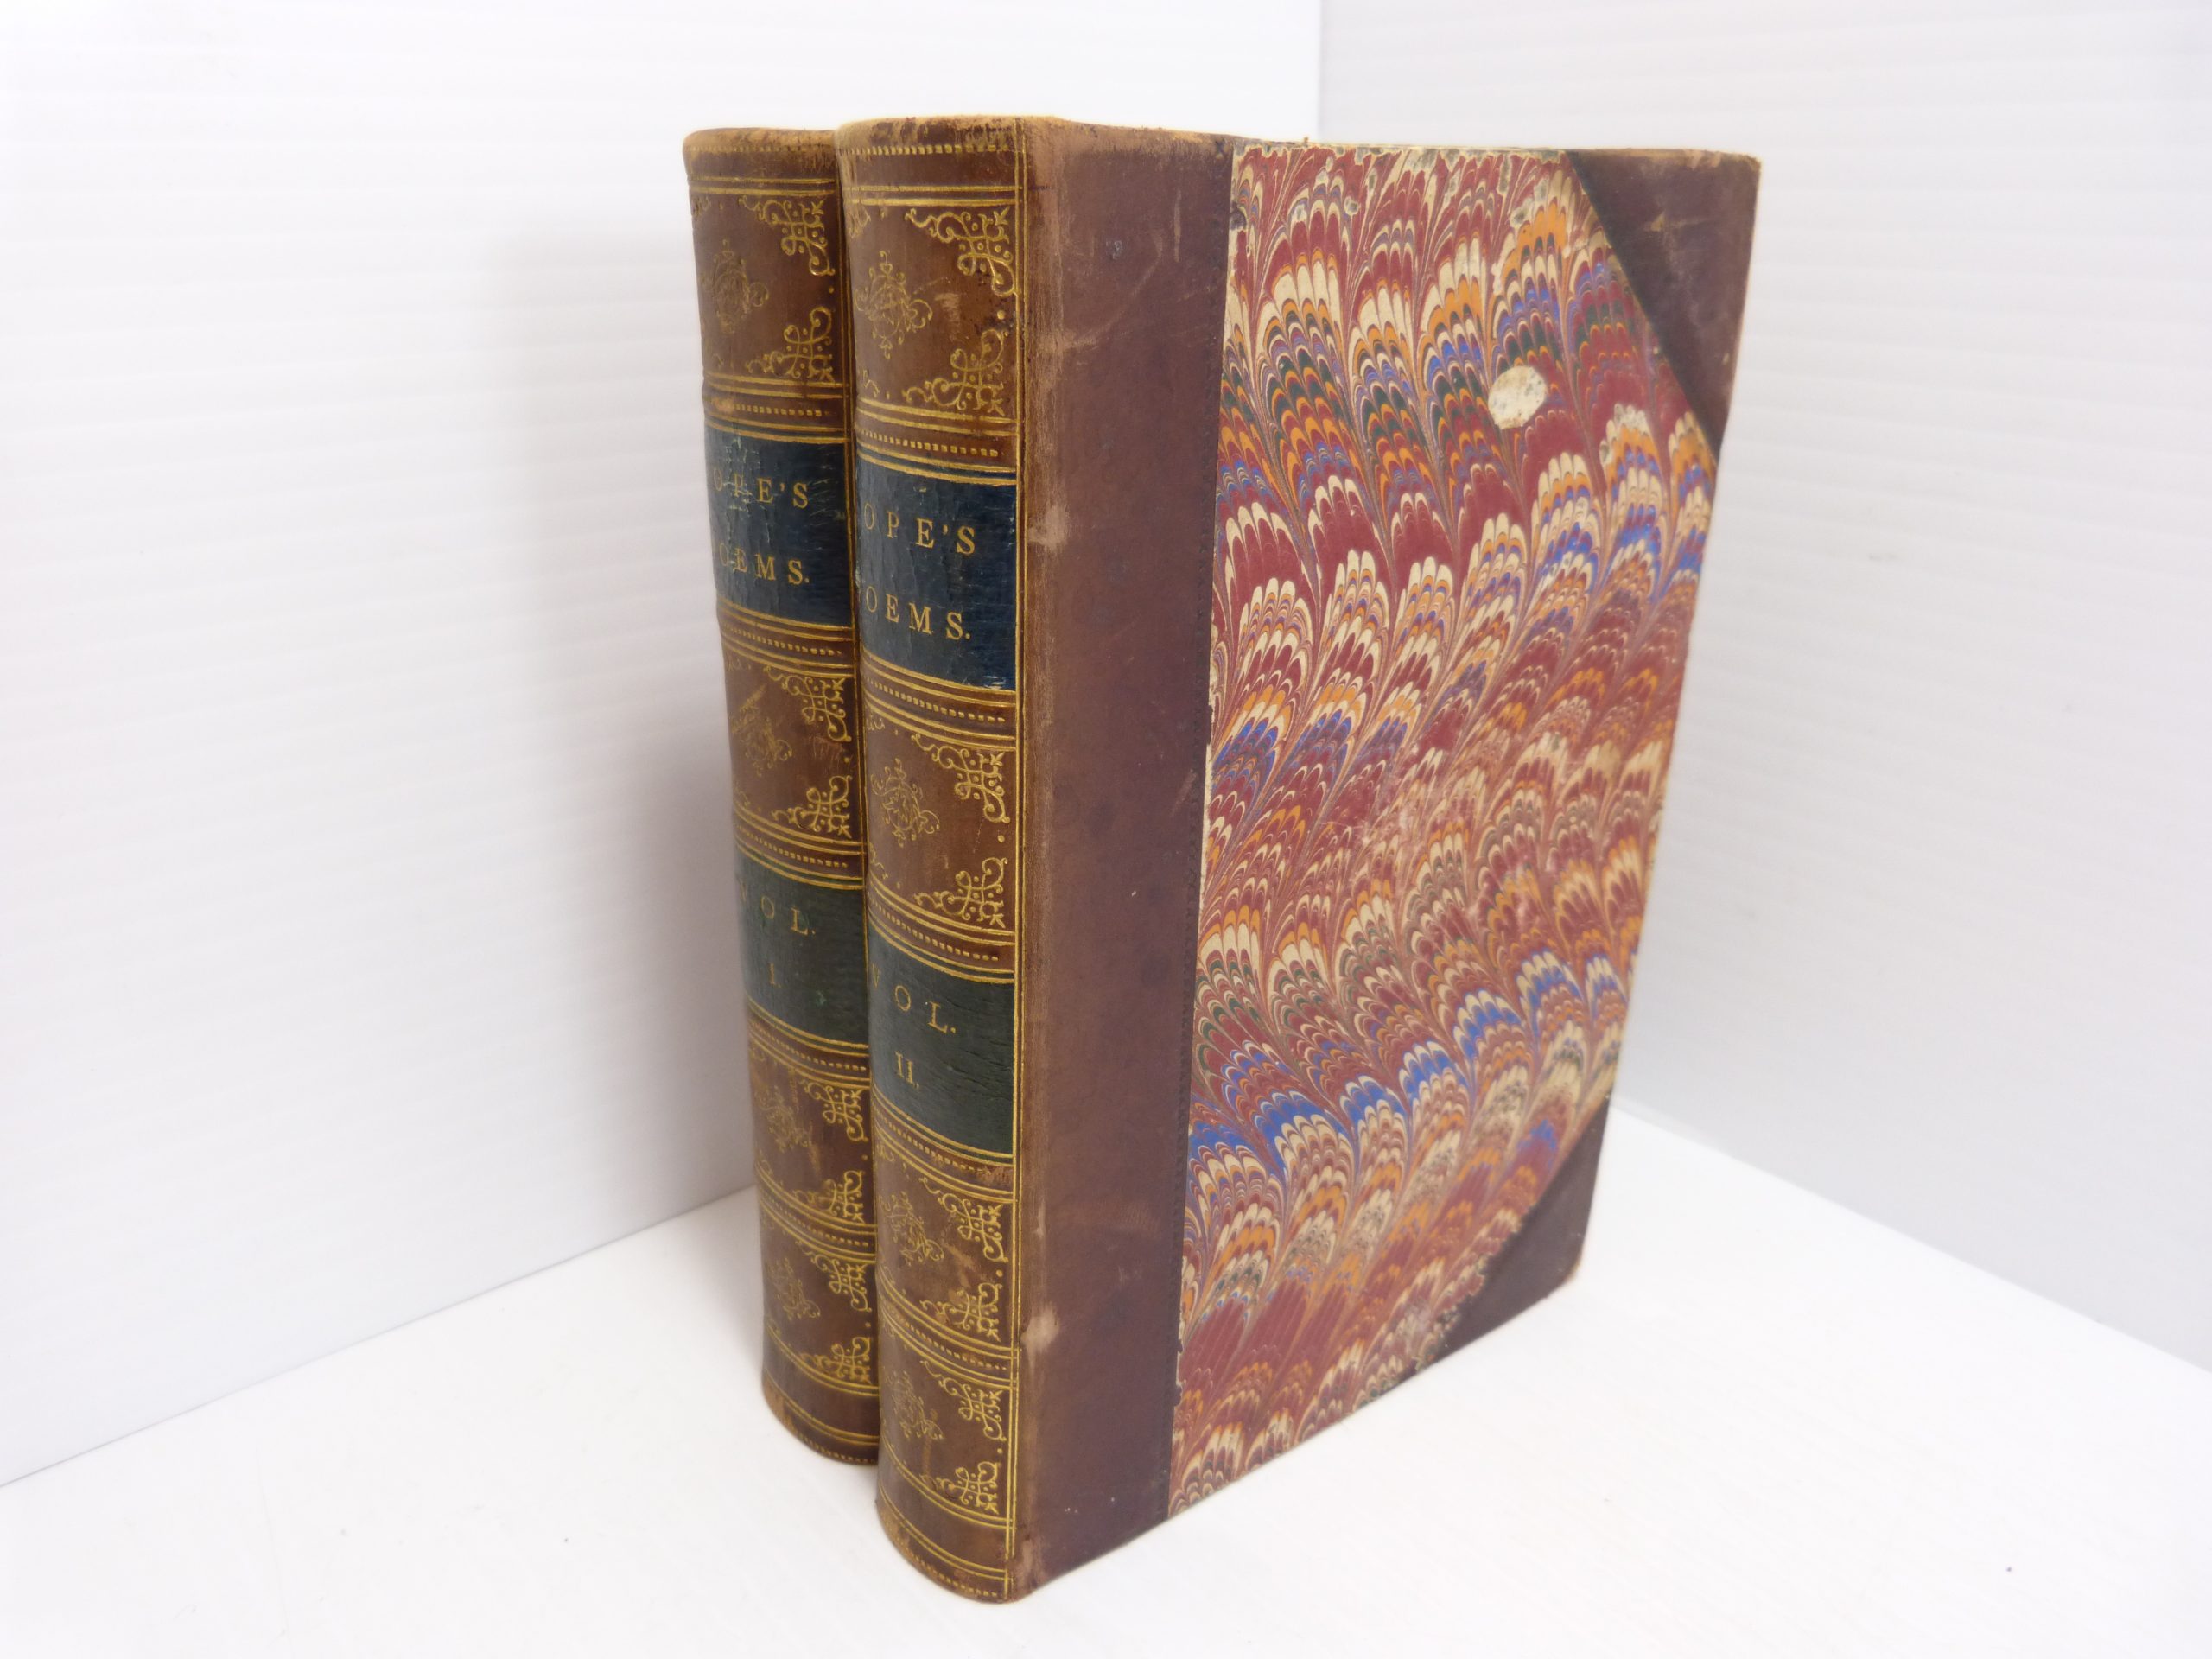 The Poetical Work Of Alexander Pope - Robert Carruthers - 2 Volumes - 1858 Henry G Bohn